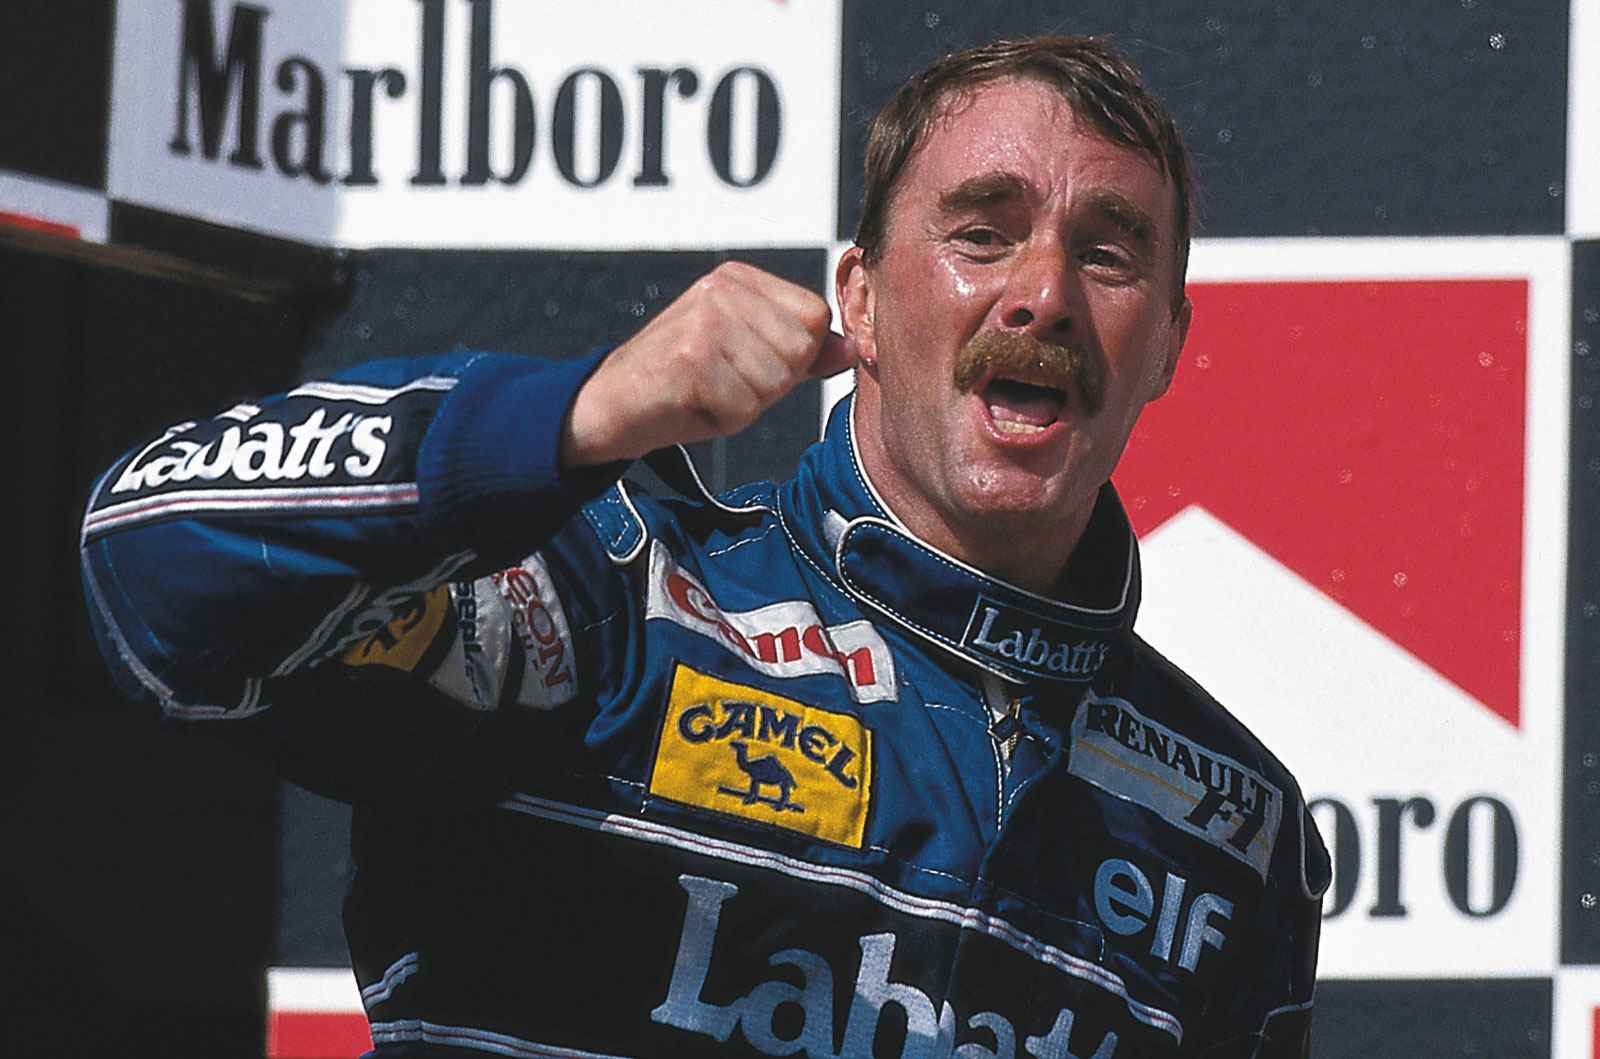 8º - Nigel Mansell - 32